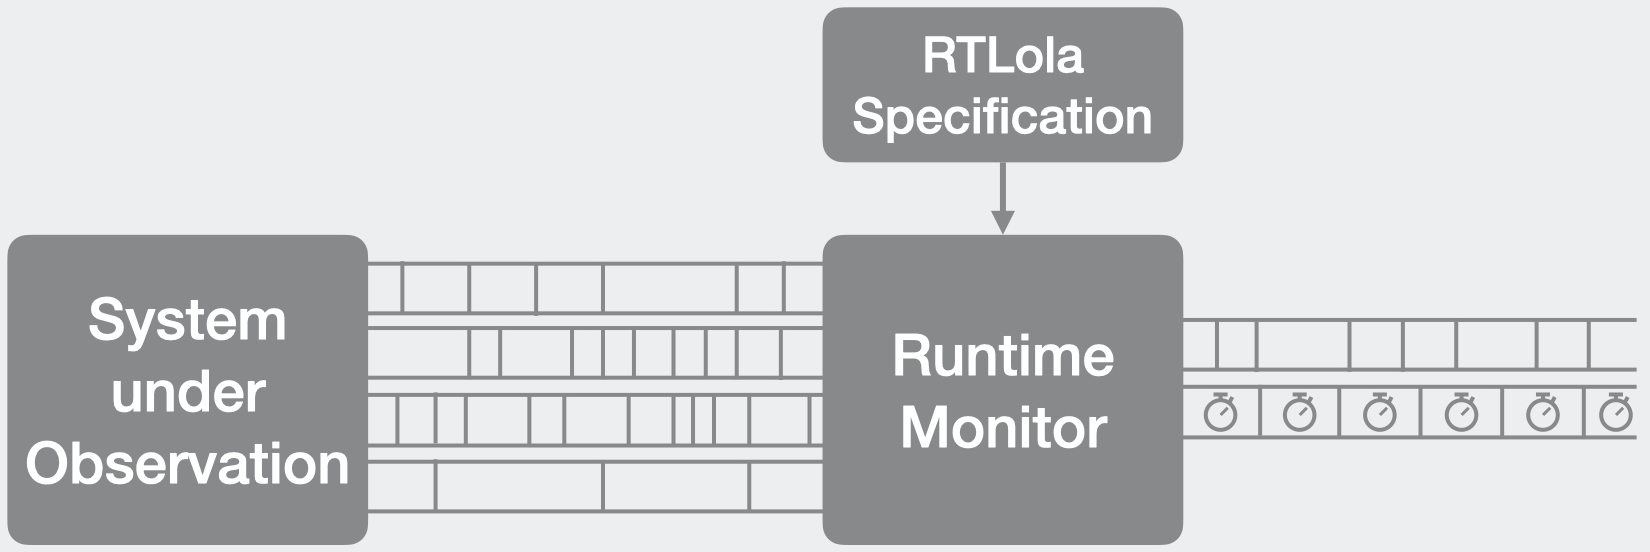 Overview of RTLola